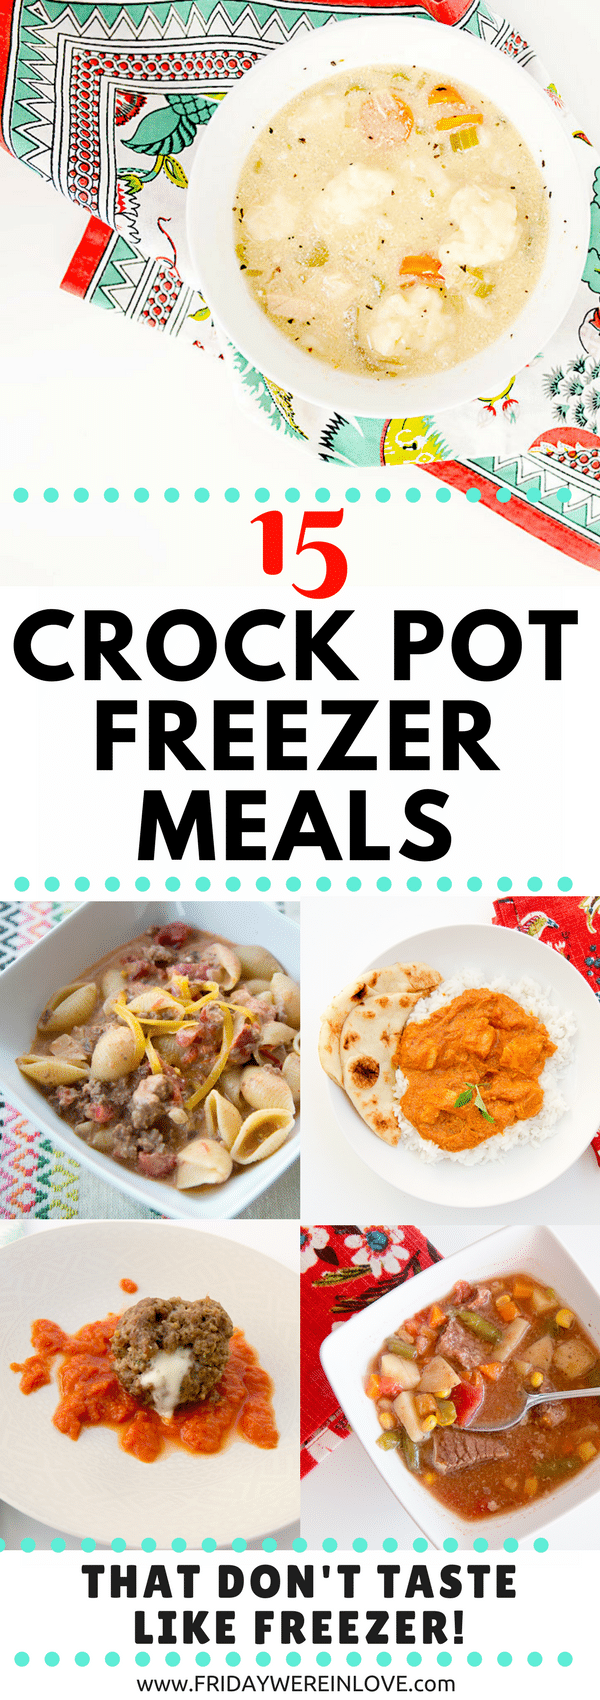 Crock Pot Freezer Meals: 15 Freezer Crock Pot Recipes that Don’t Taste Like Freezer!